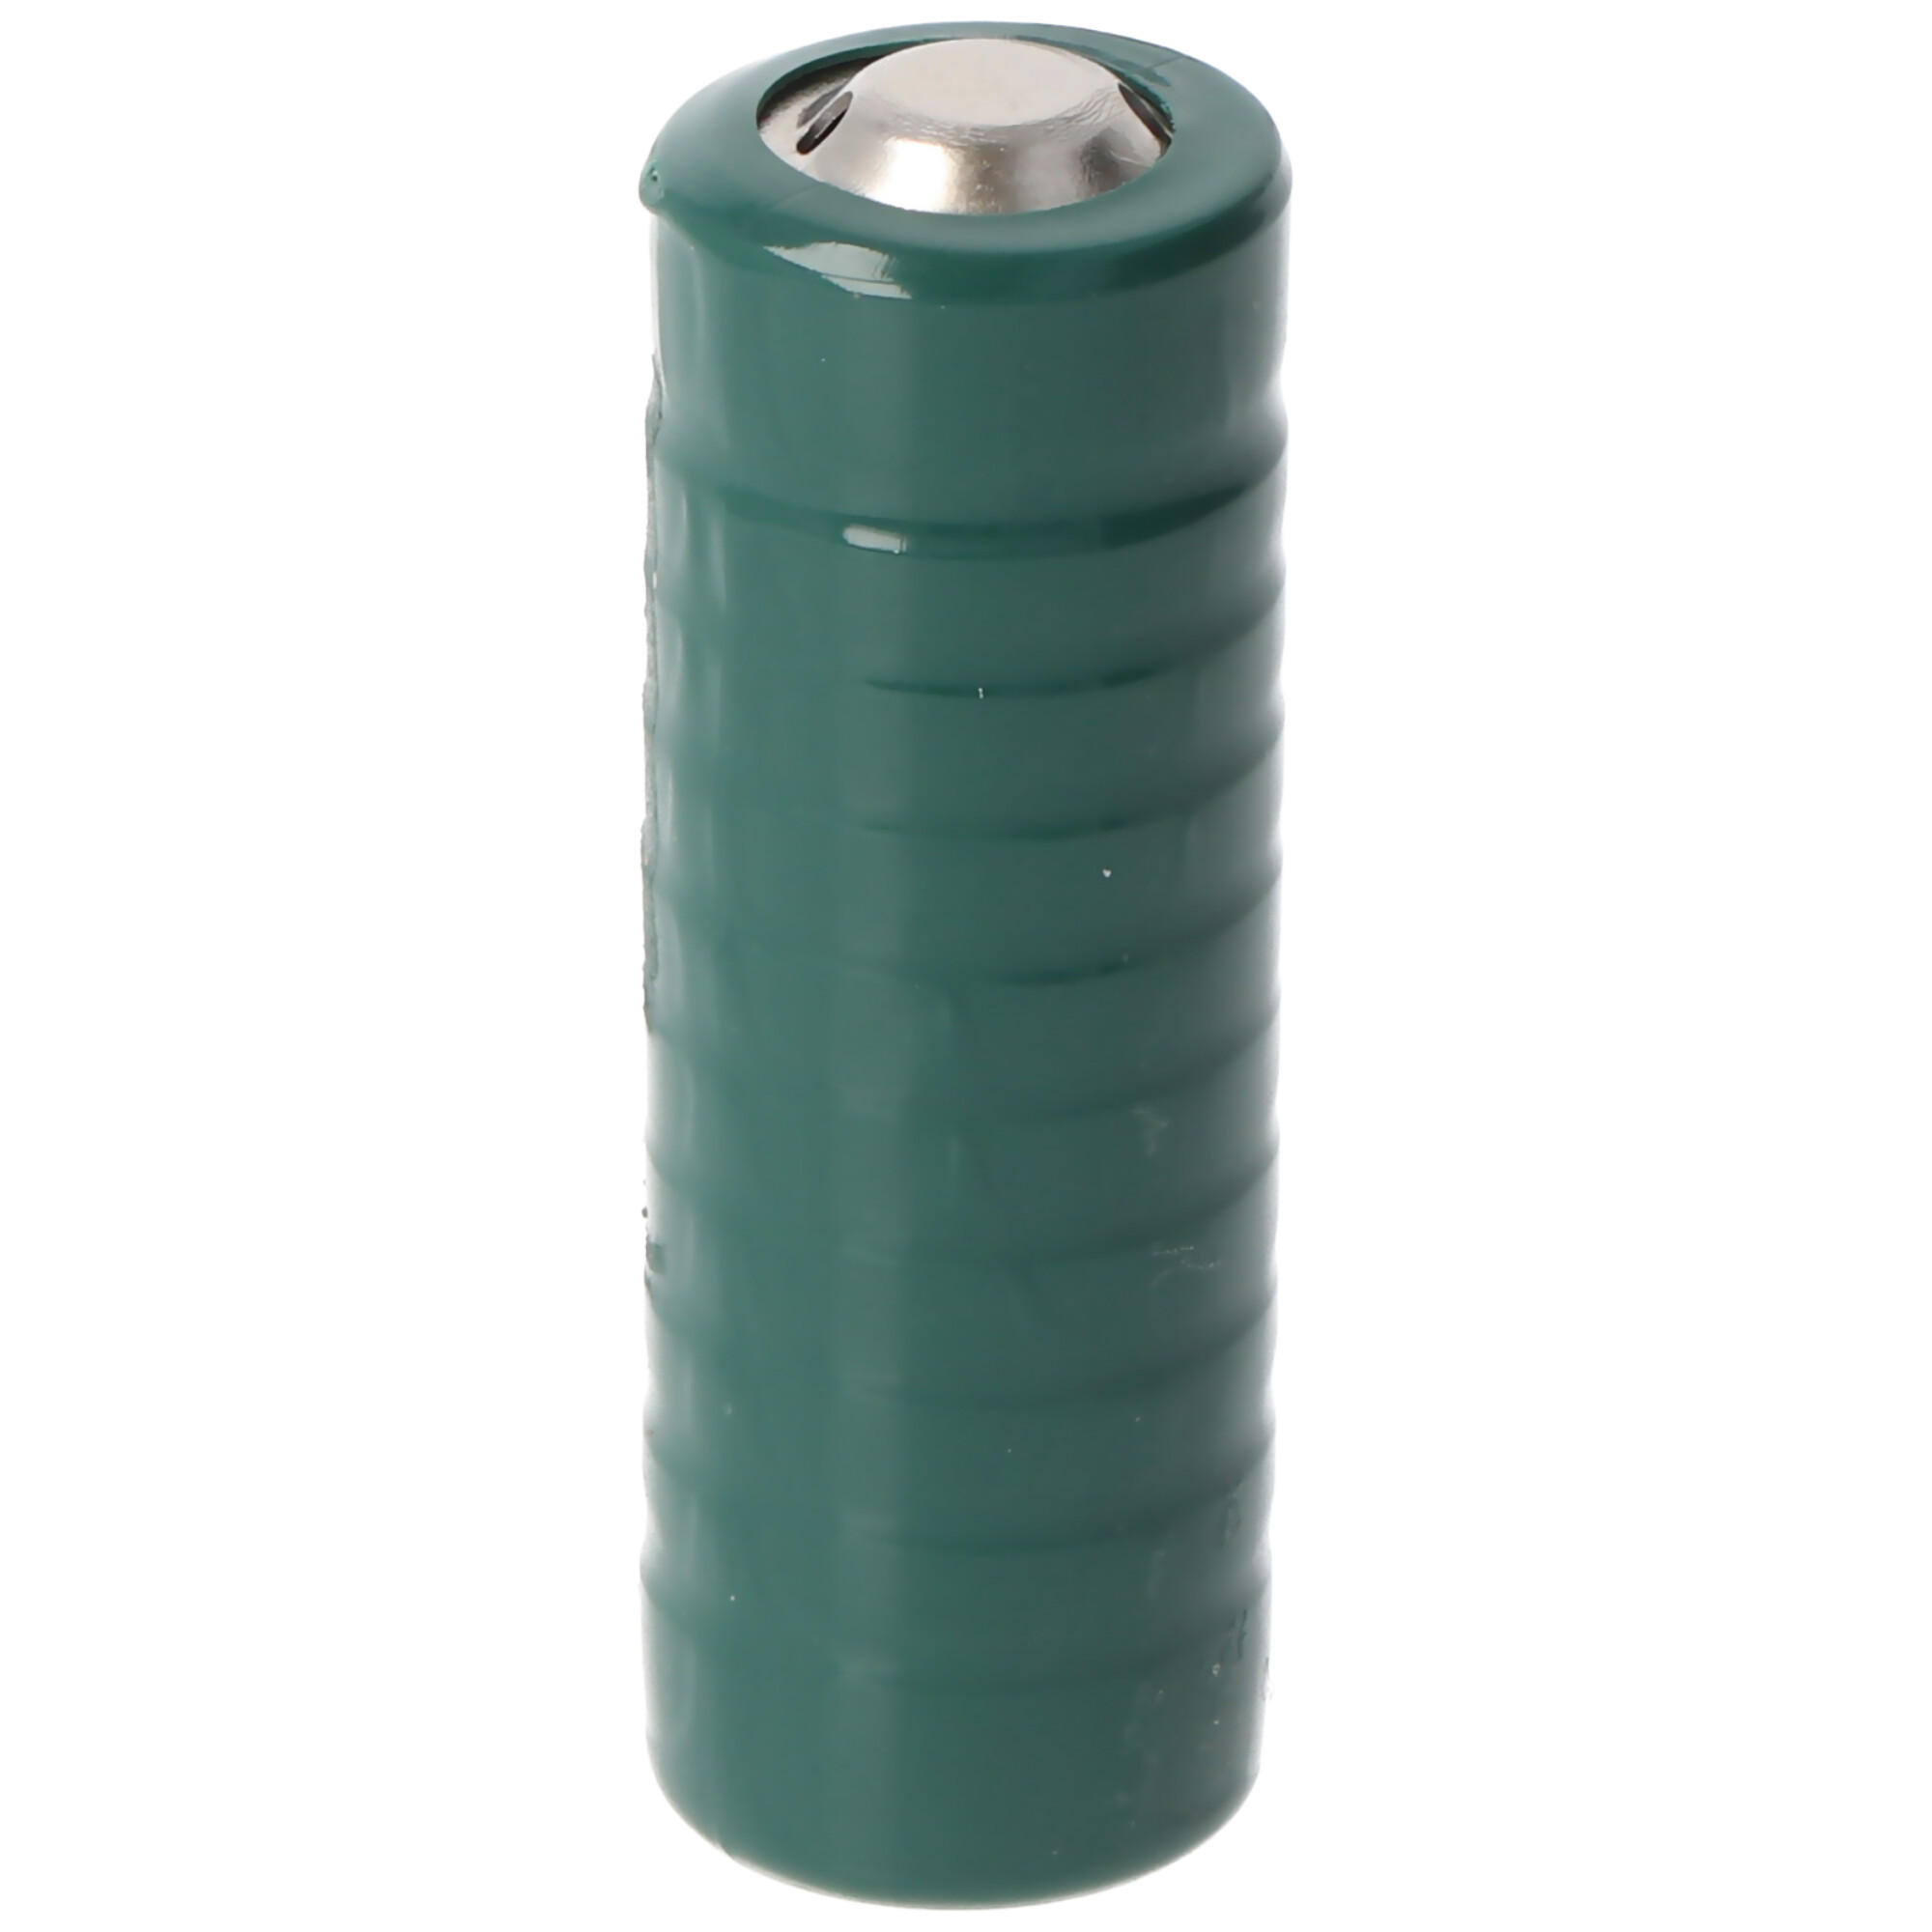 Batterie mit Kopf passend für Varta V74PX Alkaline Batterie, 10LR54, 4074, MN154, 504, 220, KA, 35,1x11,8mm